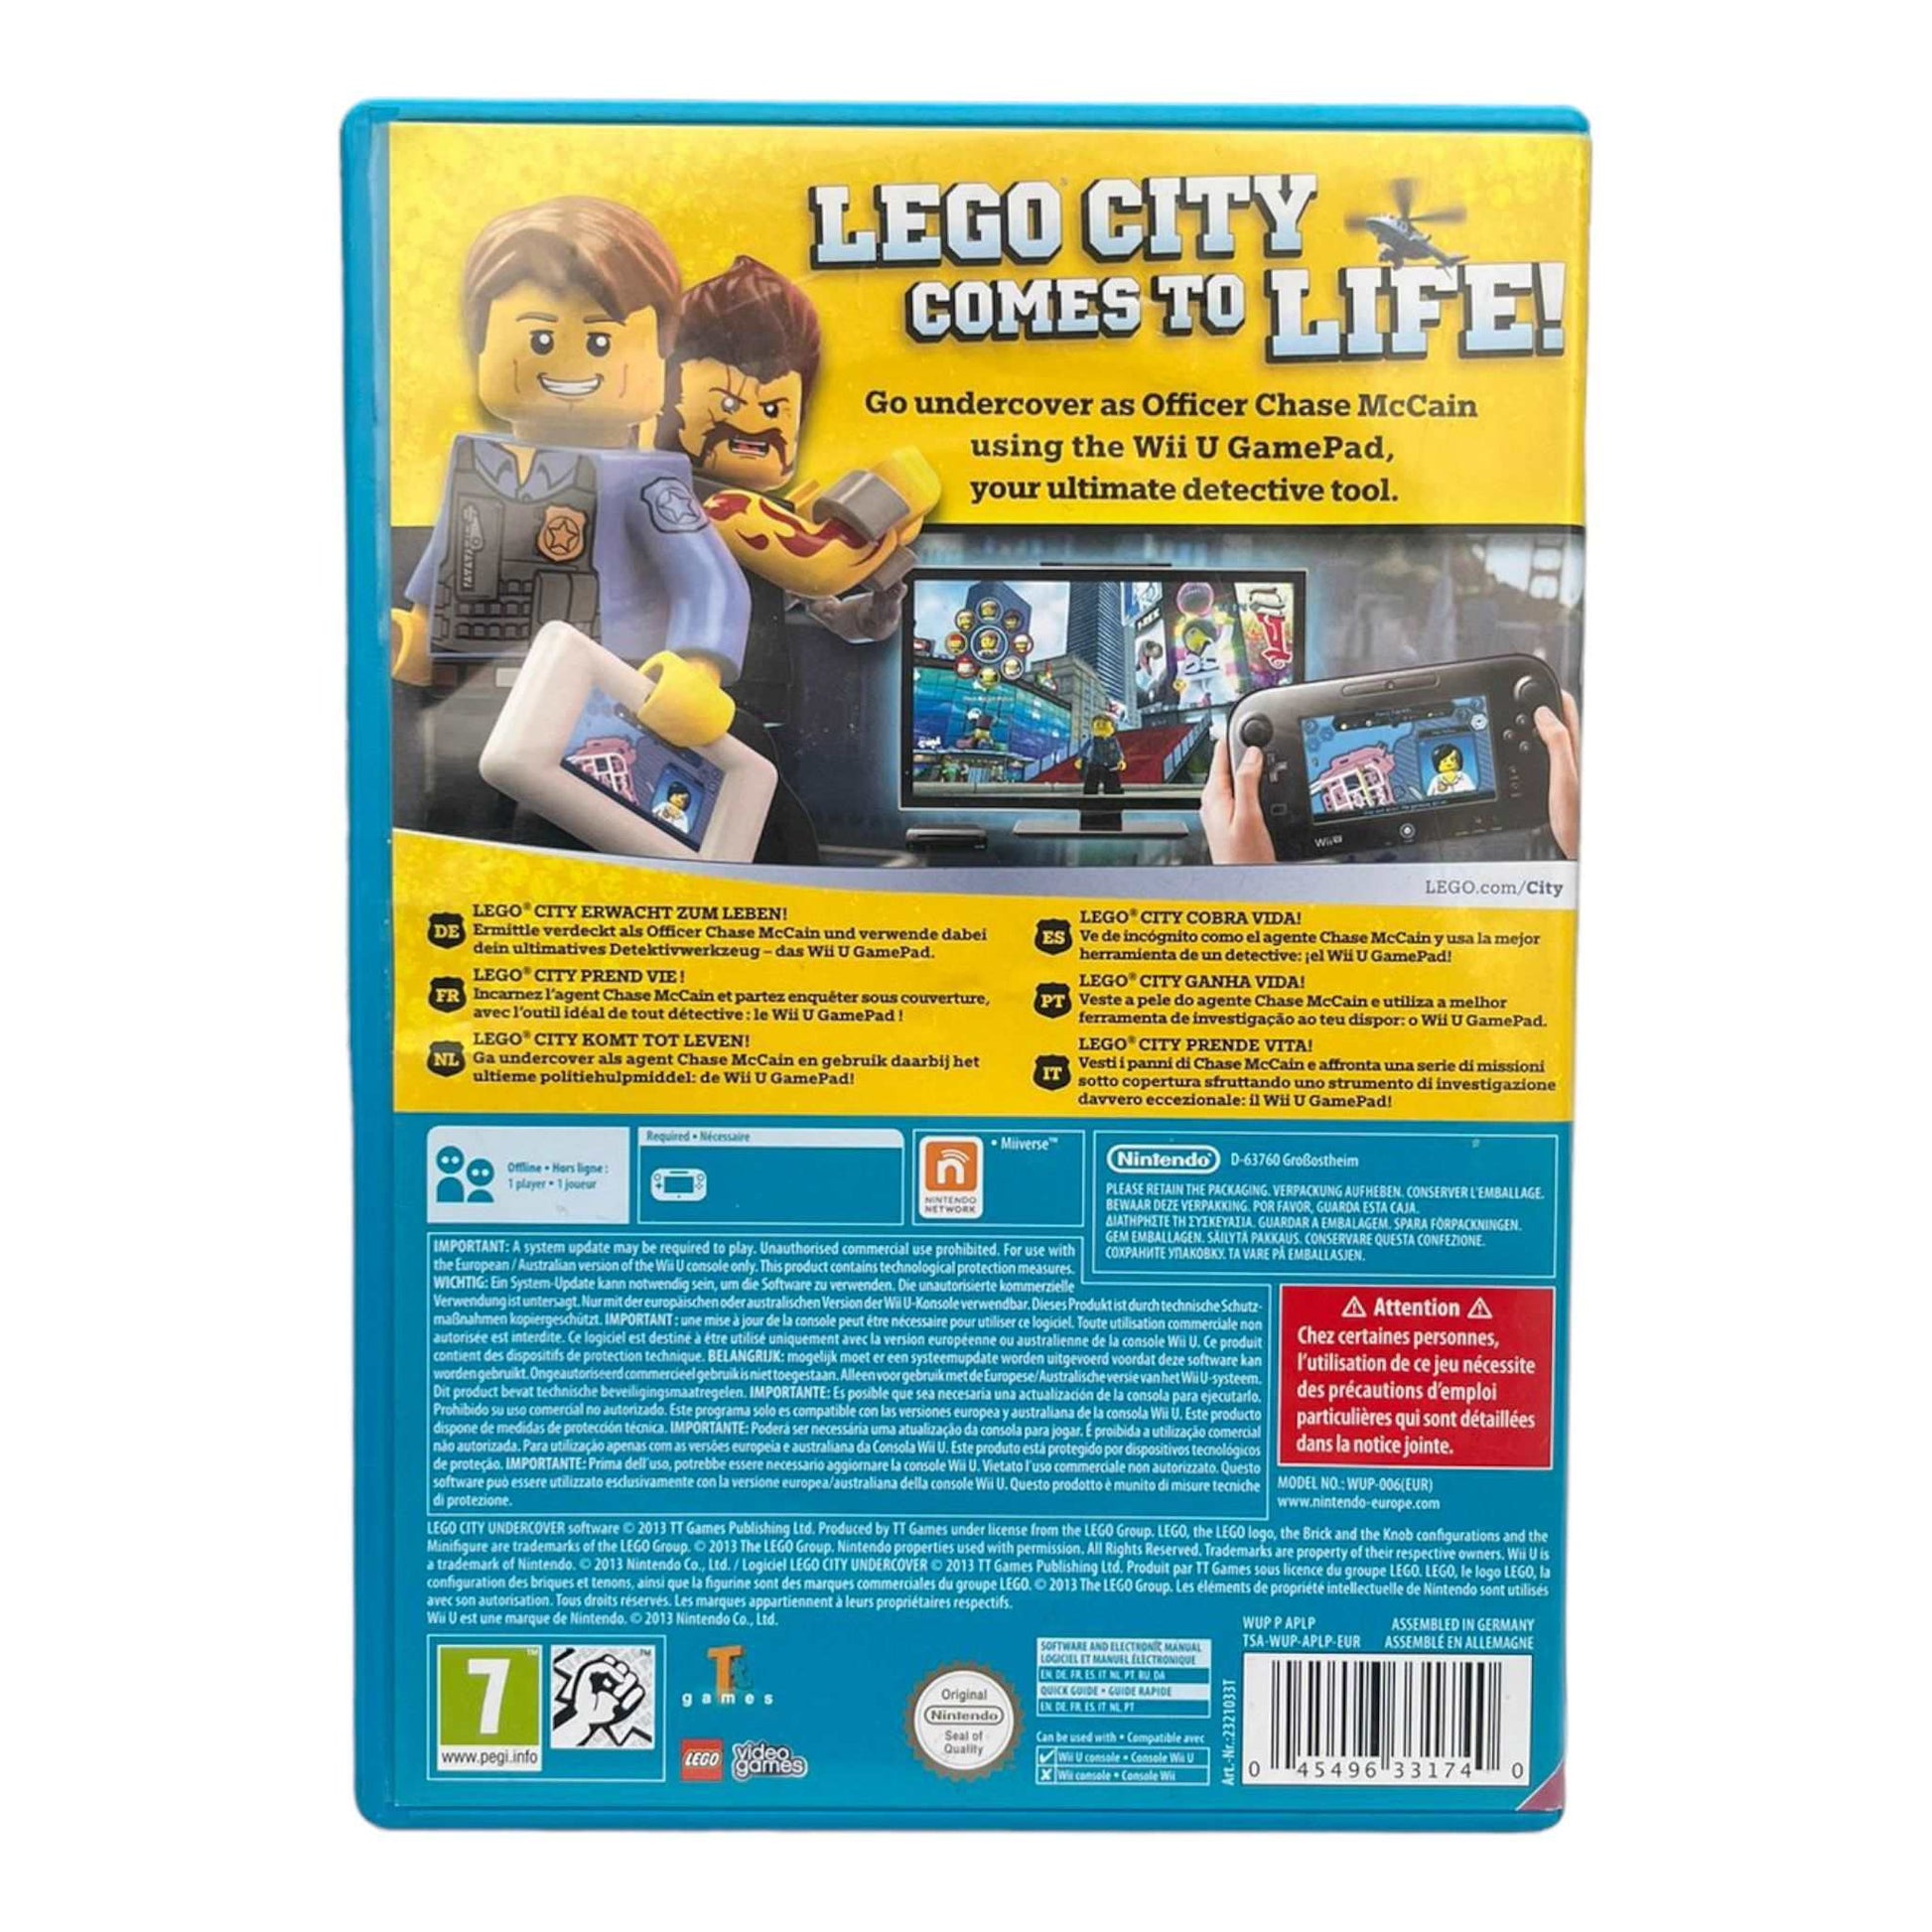 LEGO City: Uncdercover - Wii U